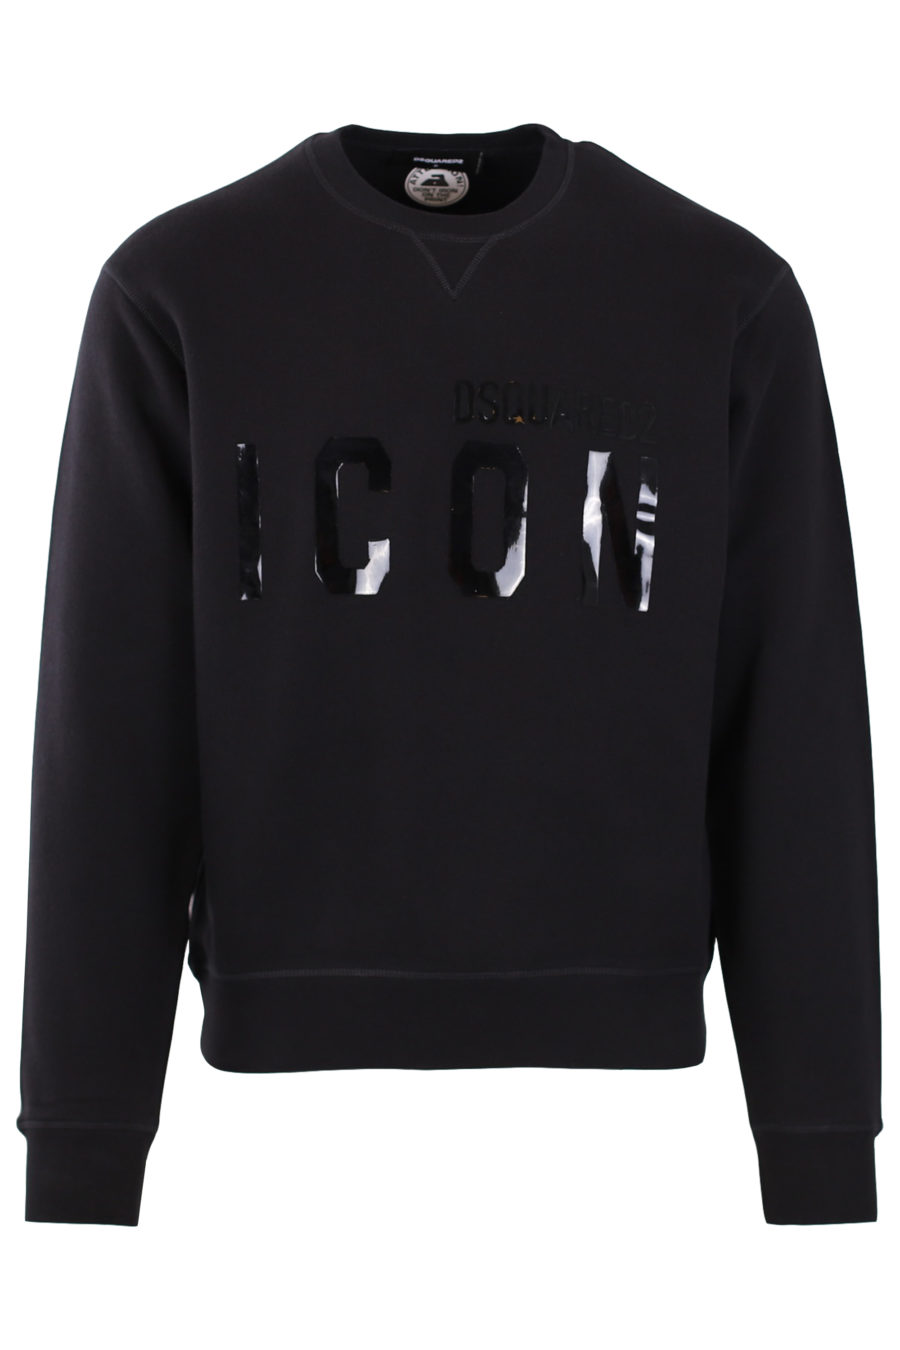 Black sweatshirt with rubberised "Icon" logo - ba185773575fee14be434fb5d717079e3f51be49